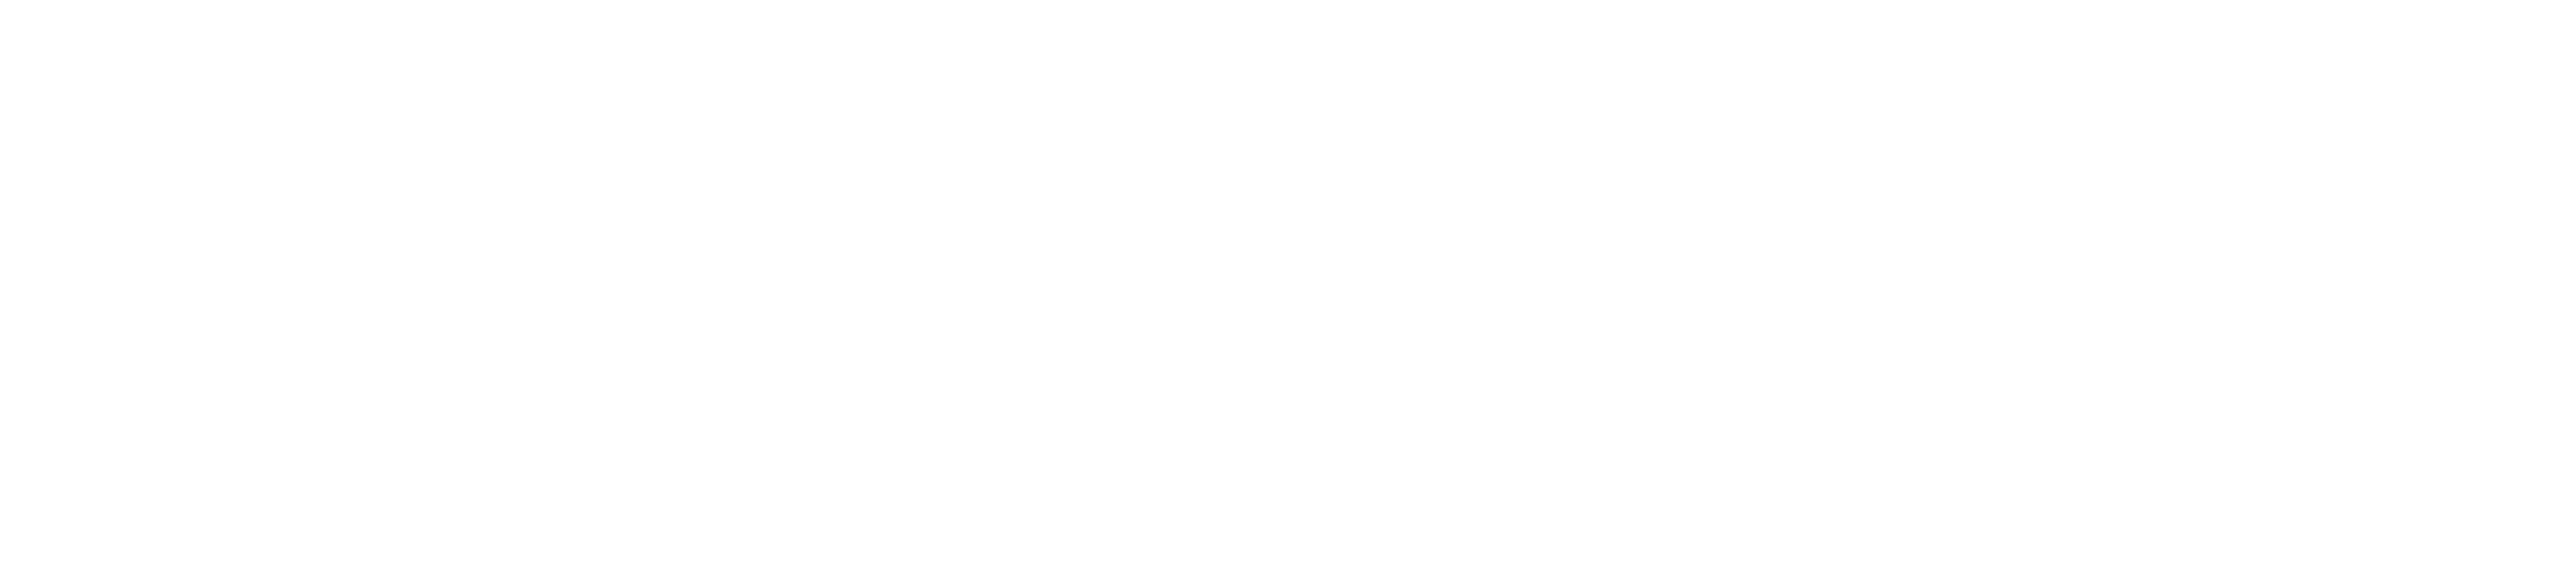 How RFS works